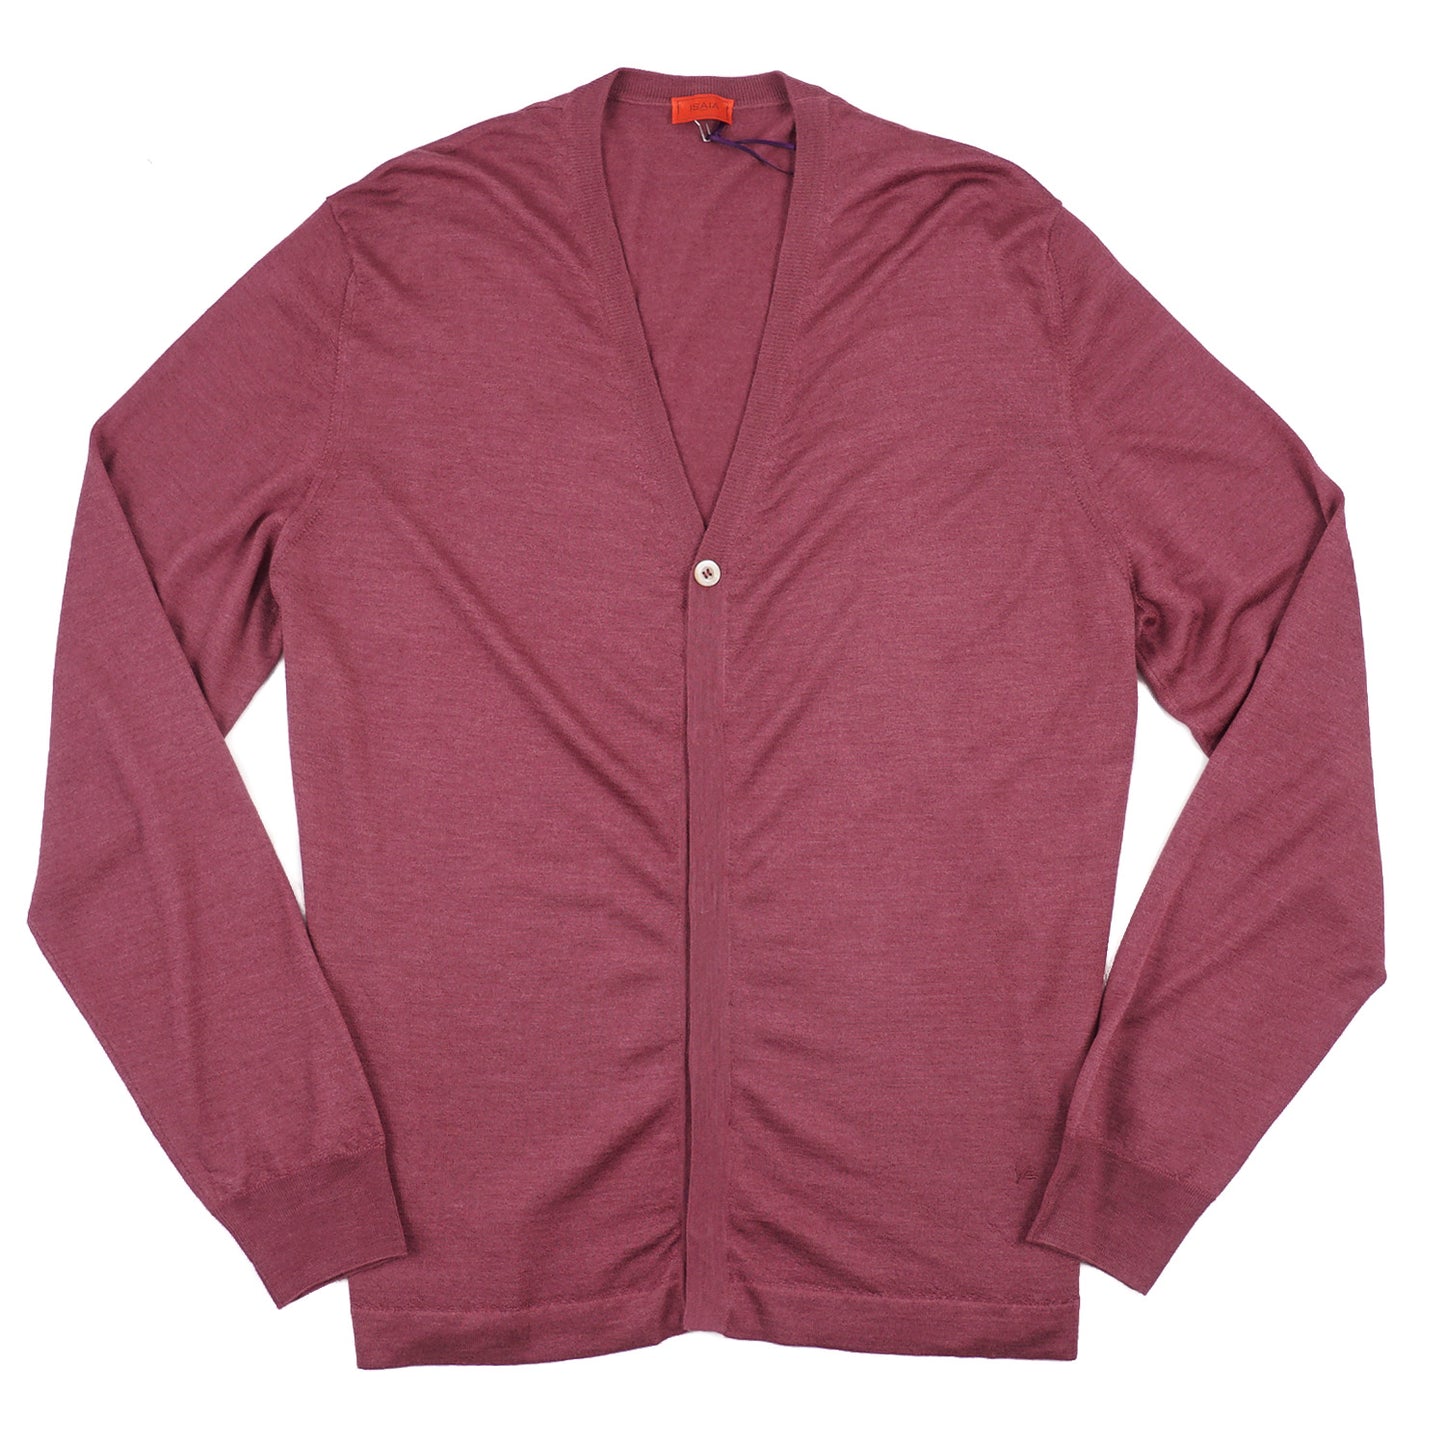 Isaia Superfine Cashmere and Silk Cardigan Sweater - Top Shelf Apparel